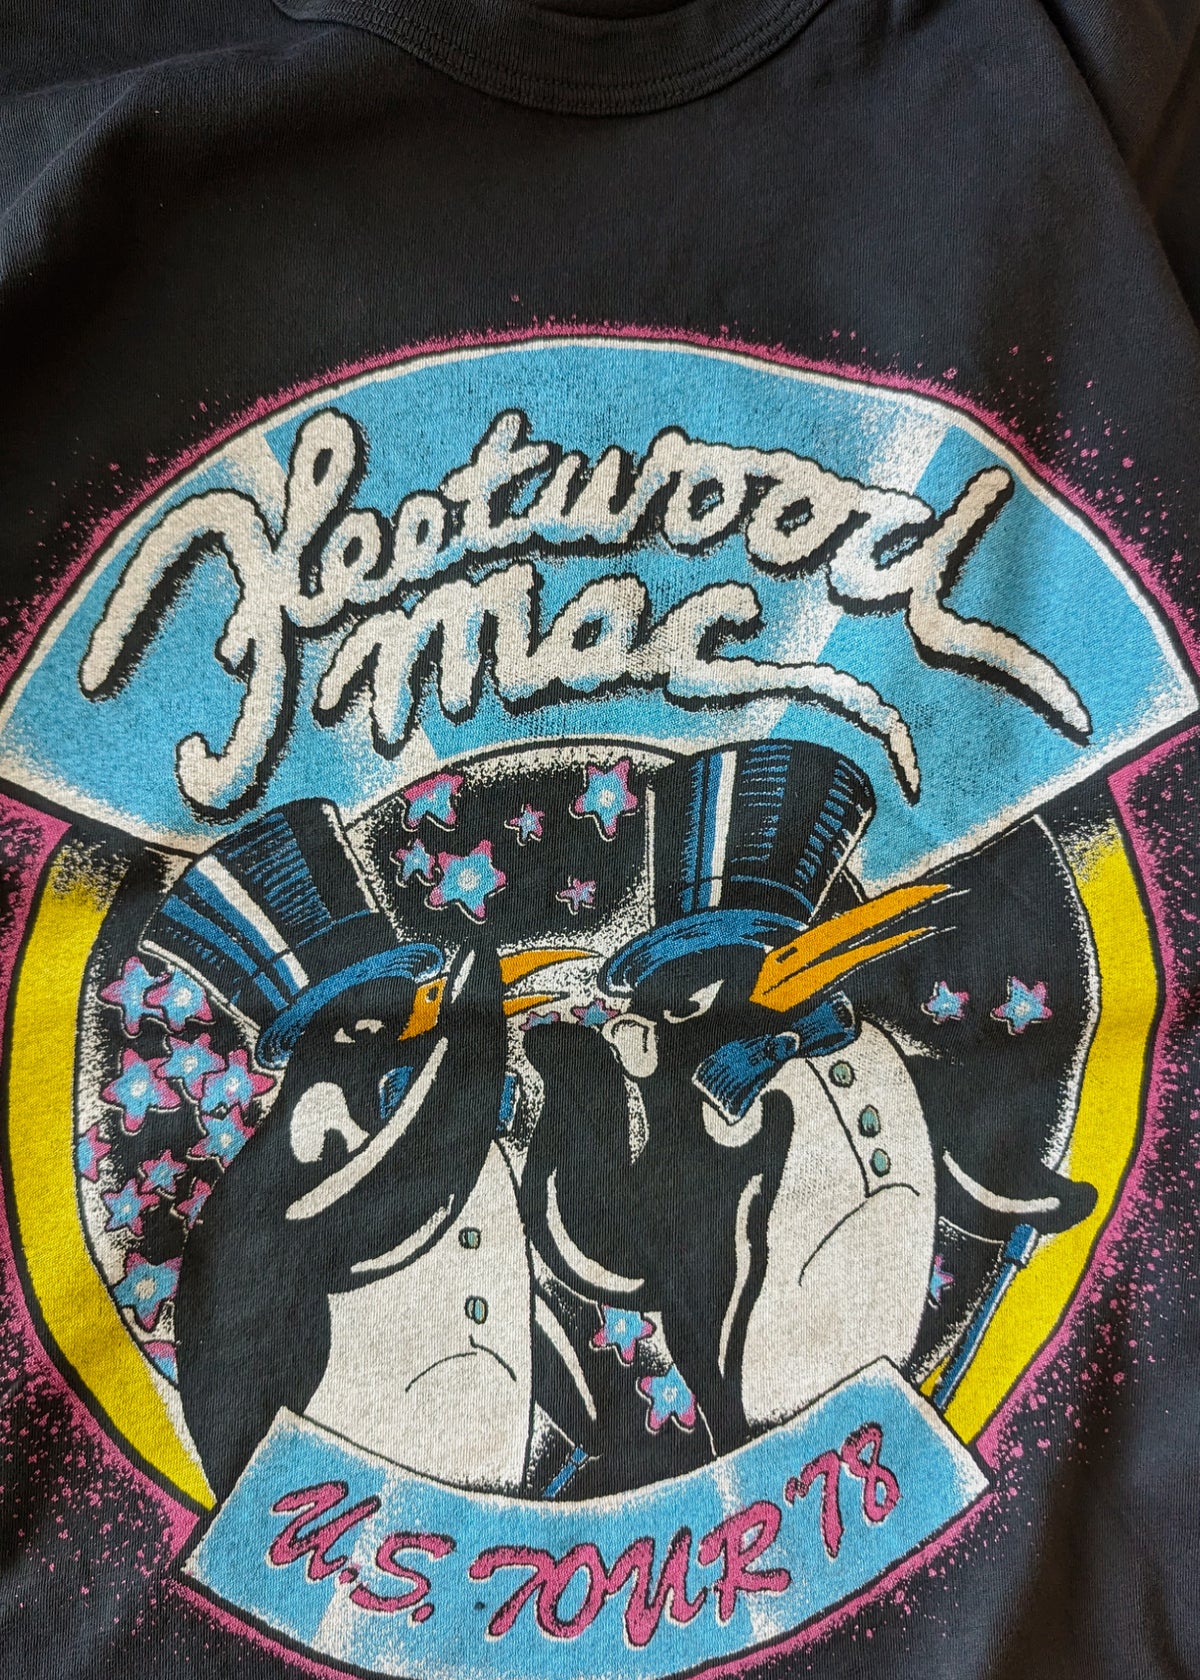 Fleetwood Mac US Tour '78 Penguins Ringer Tee